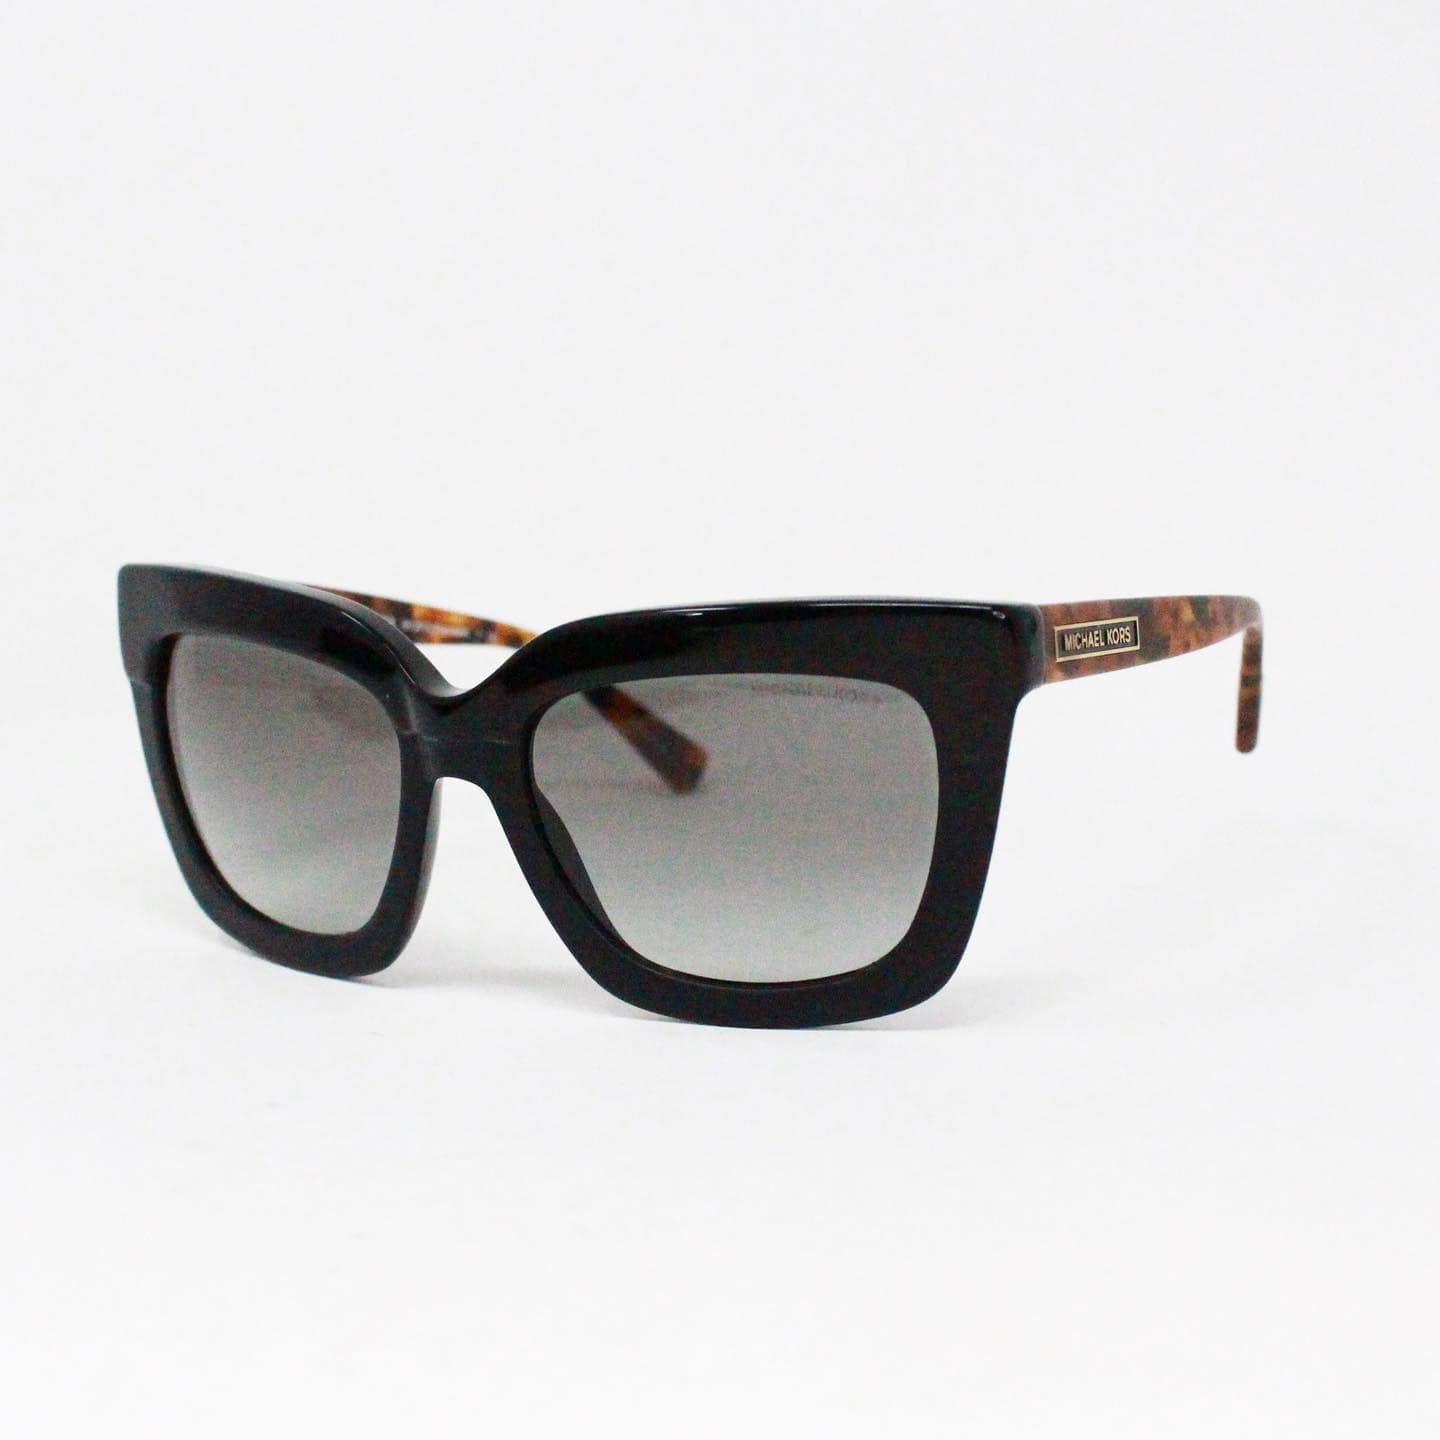 MICHAEL KORS #MCA228 Black and Brown Tortoise Frame Sunglasses – ALL YOUR  BLISS